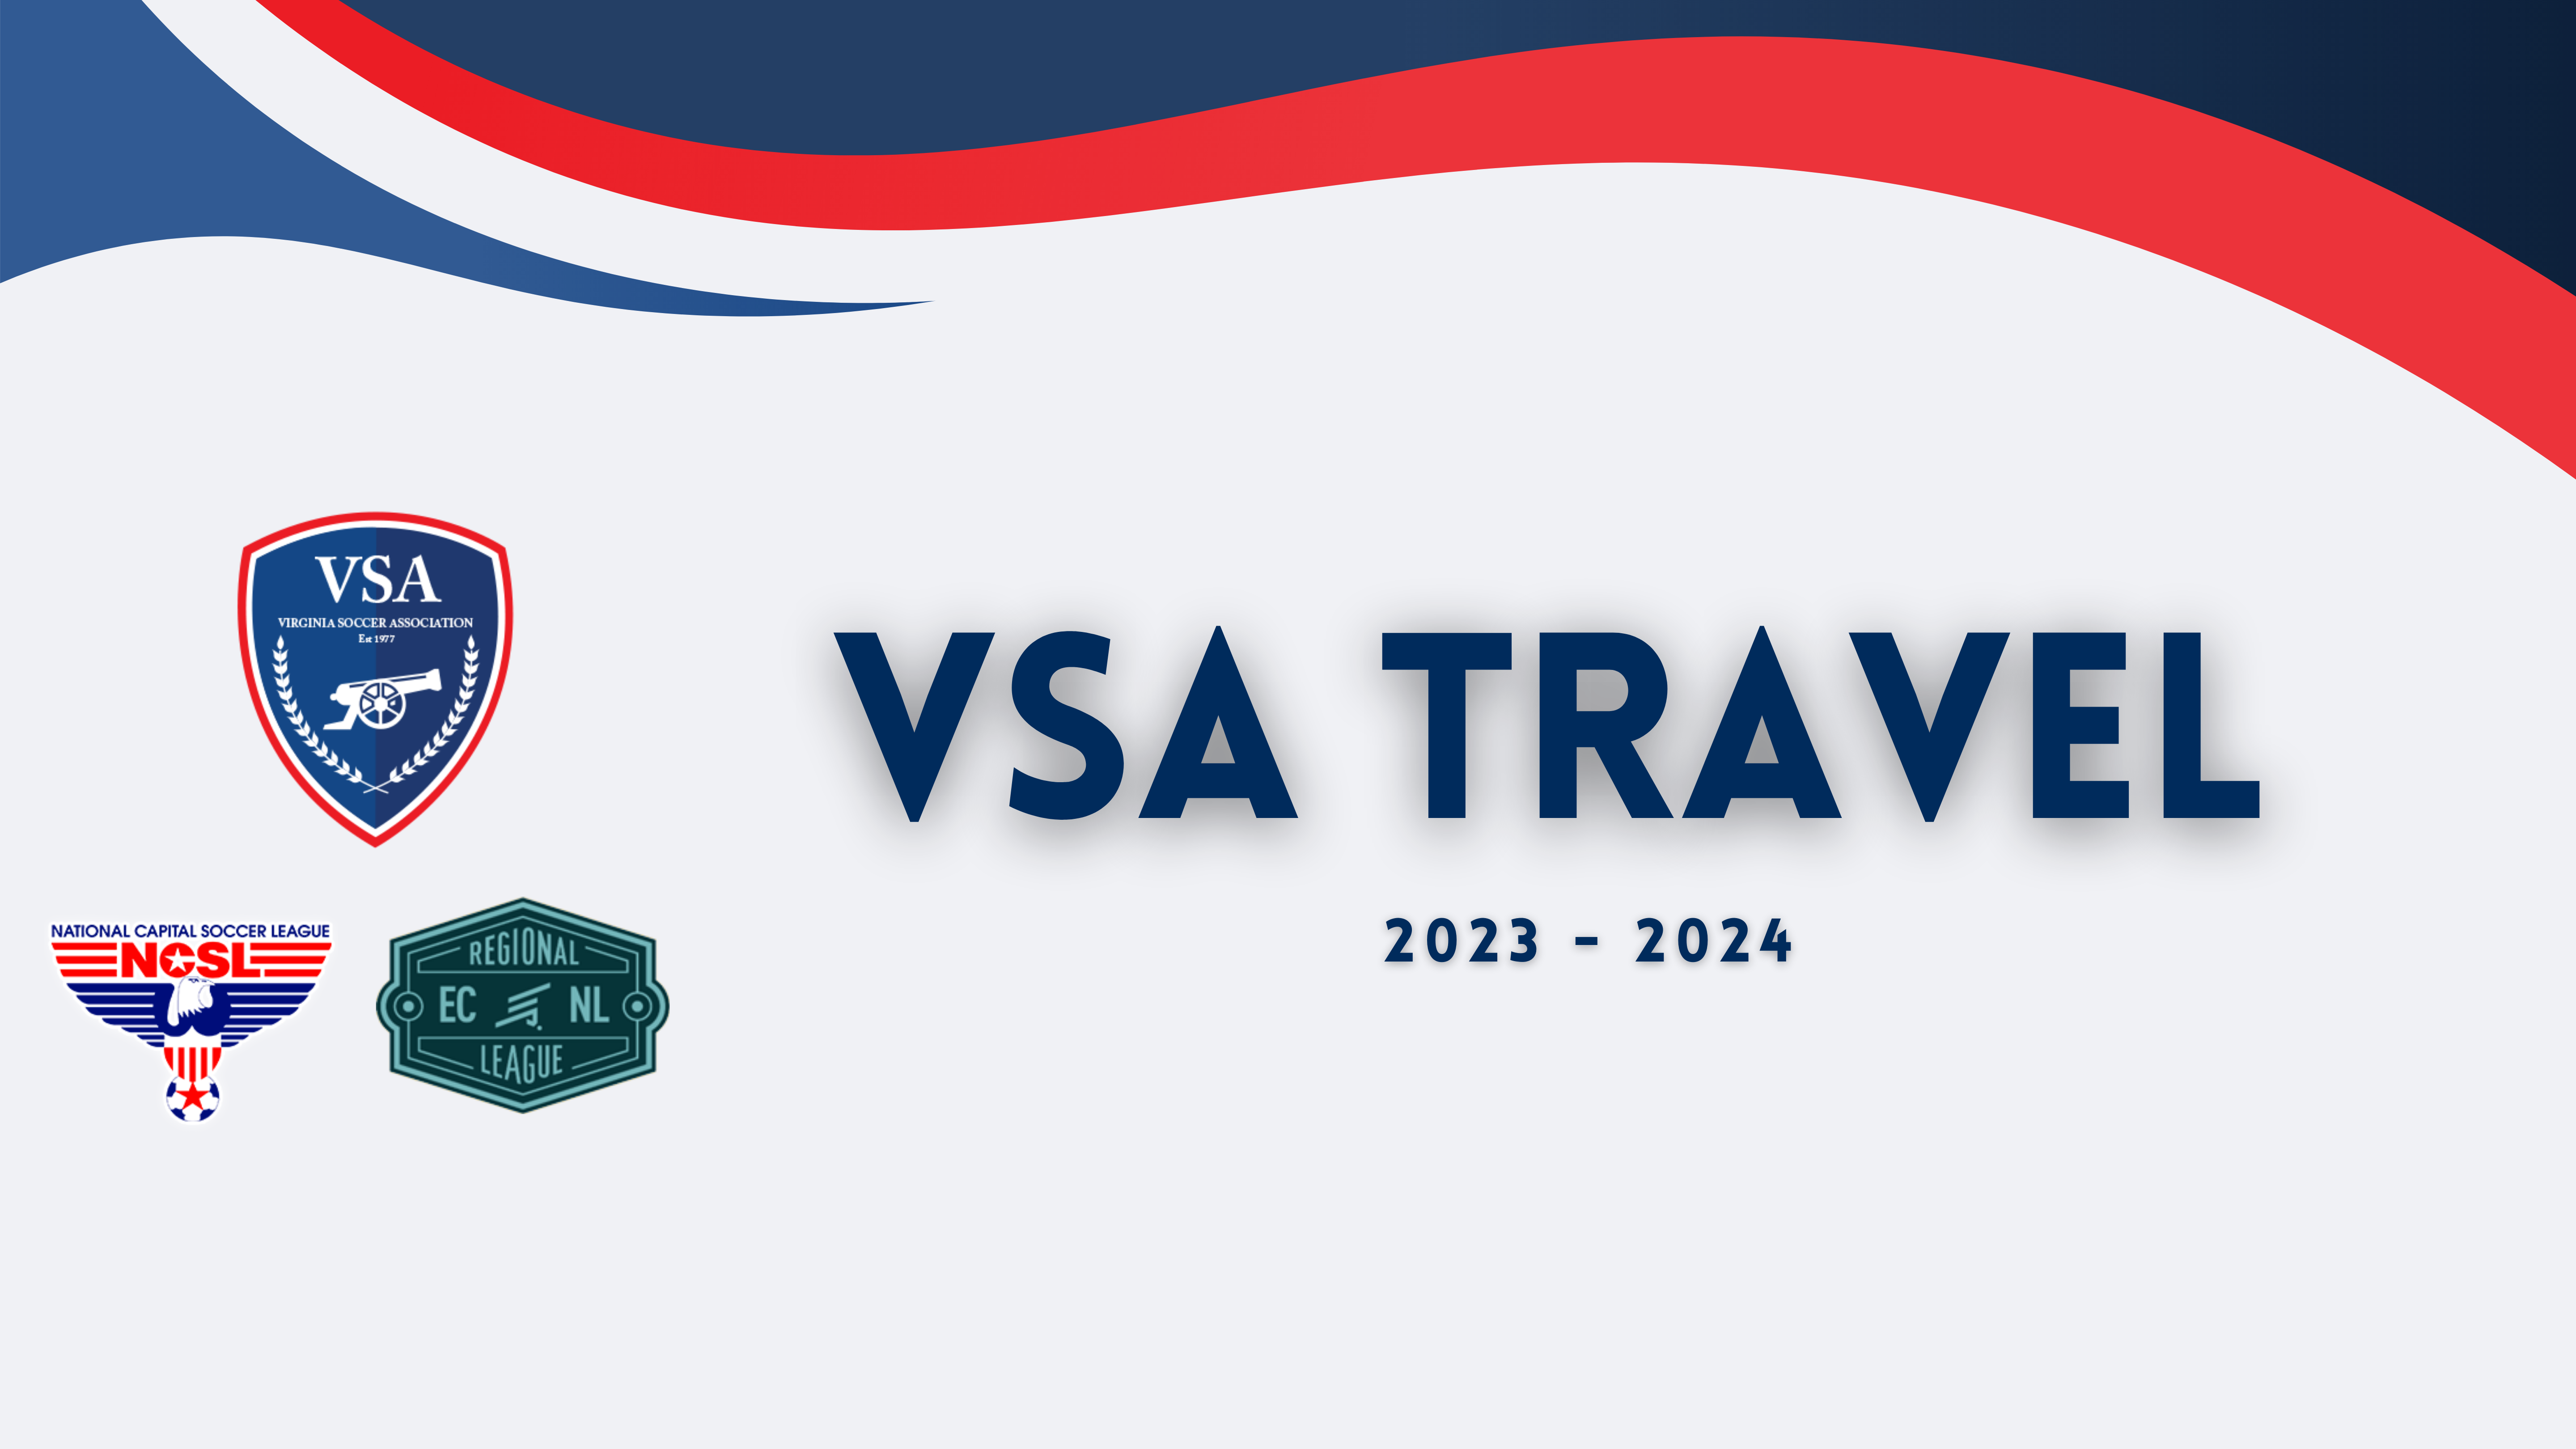 VSA Travel